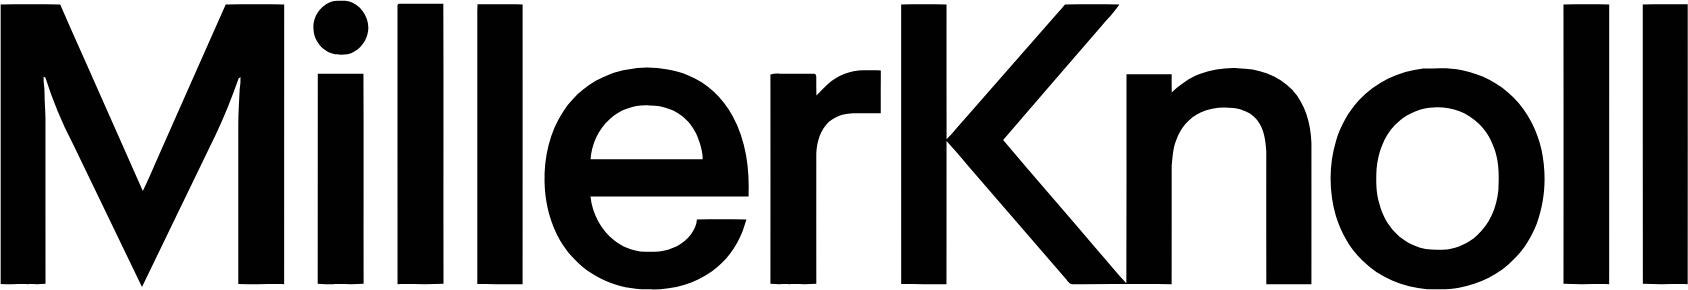 MillerKnoll logo large (transparent PNG)